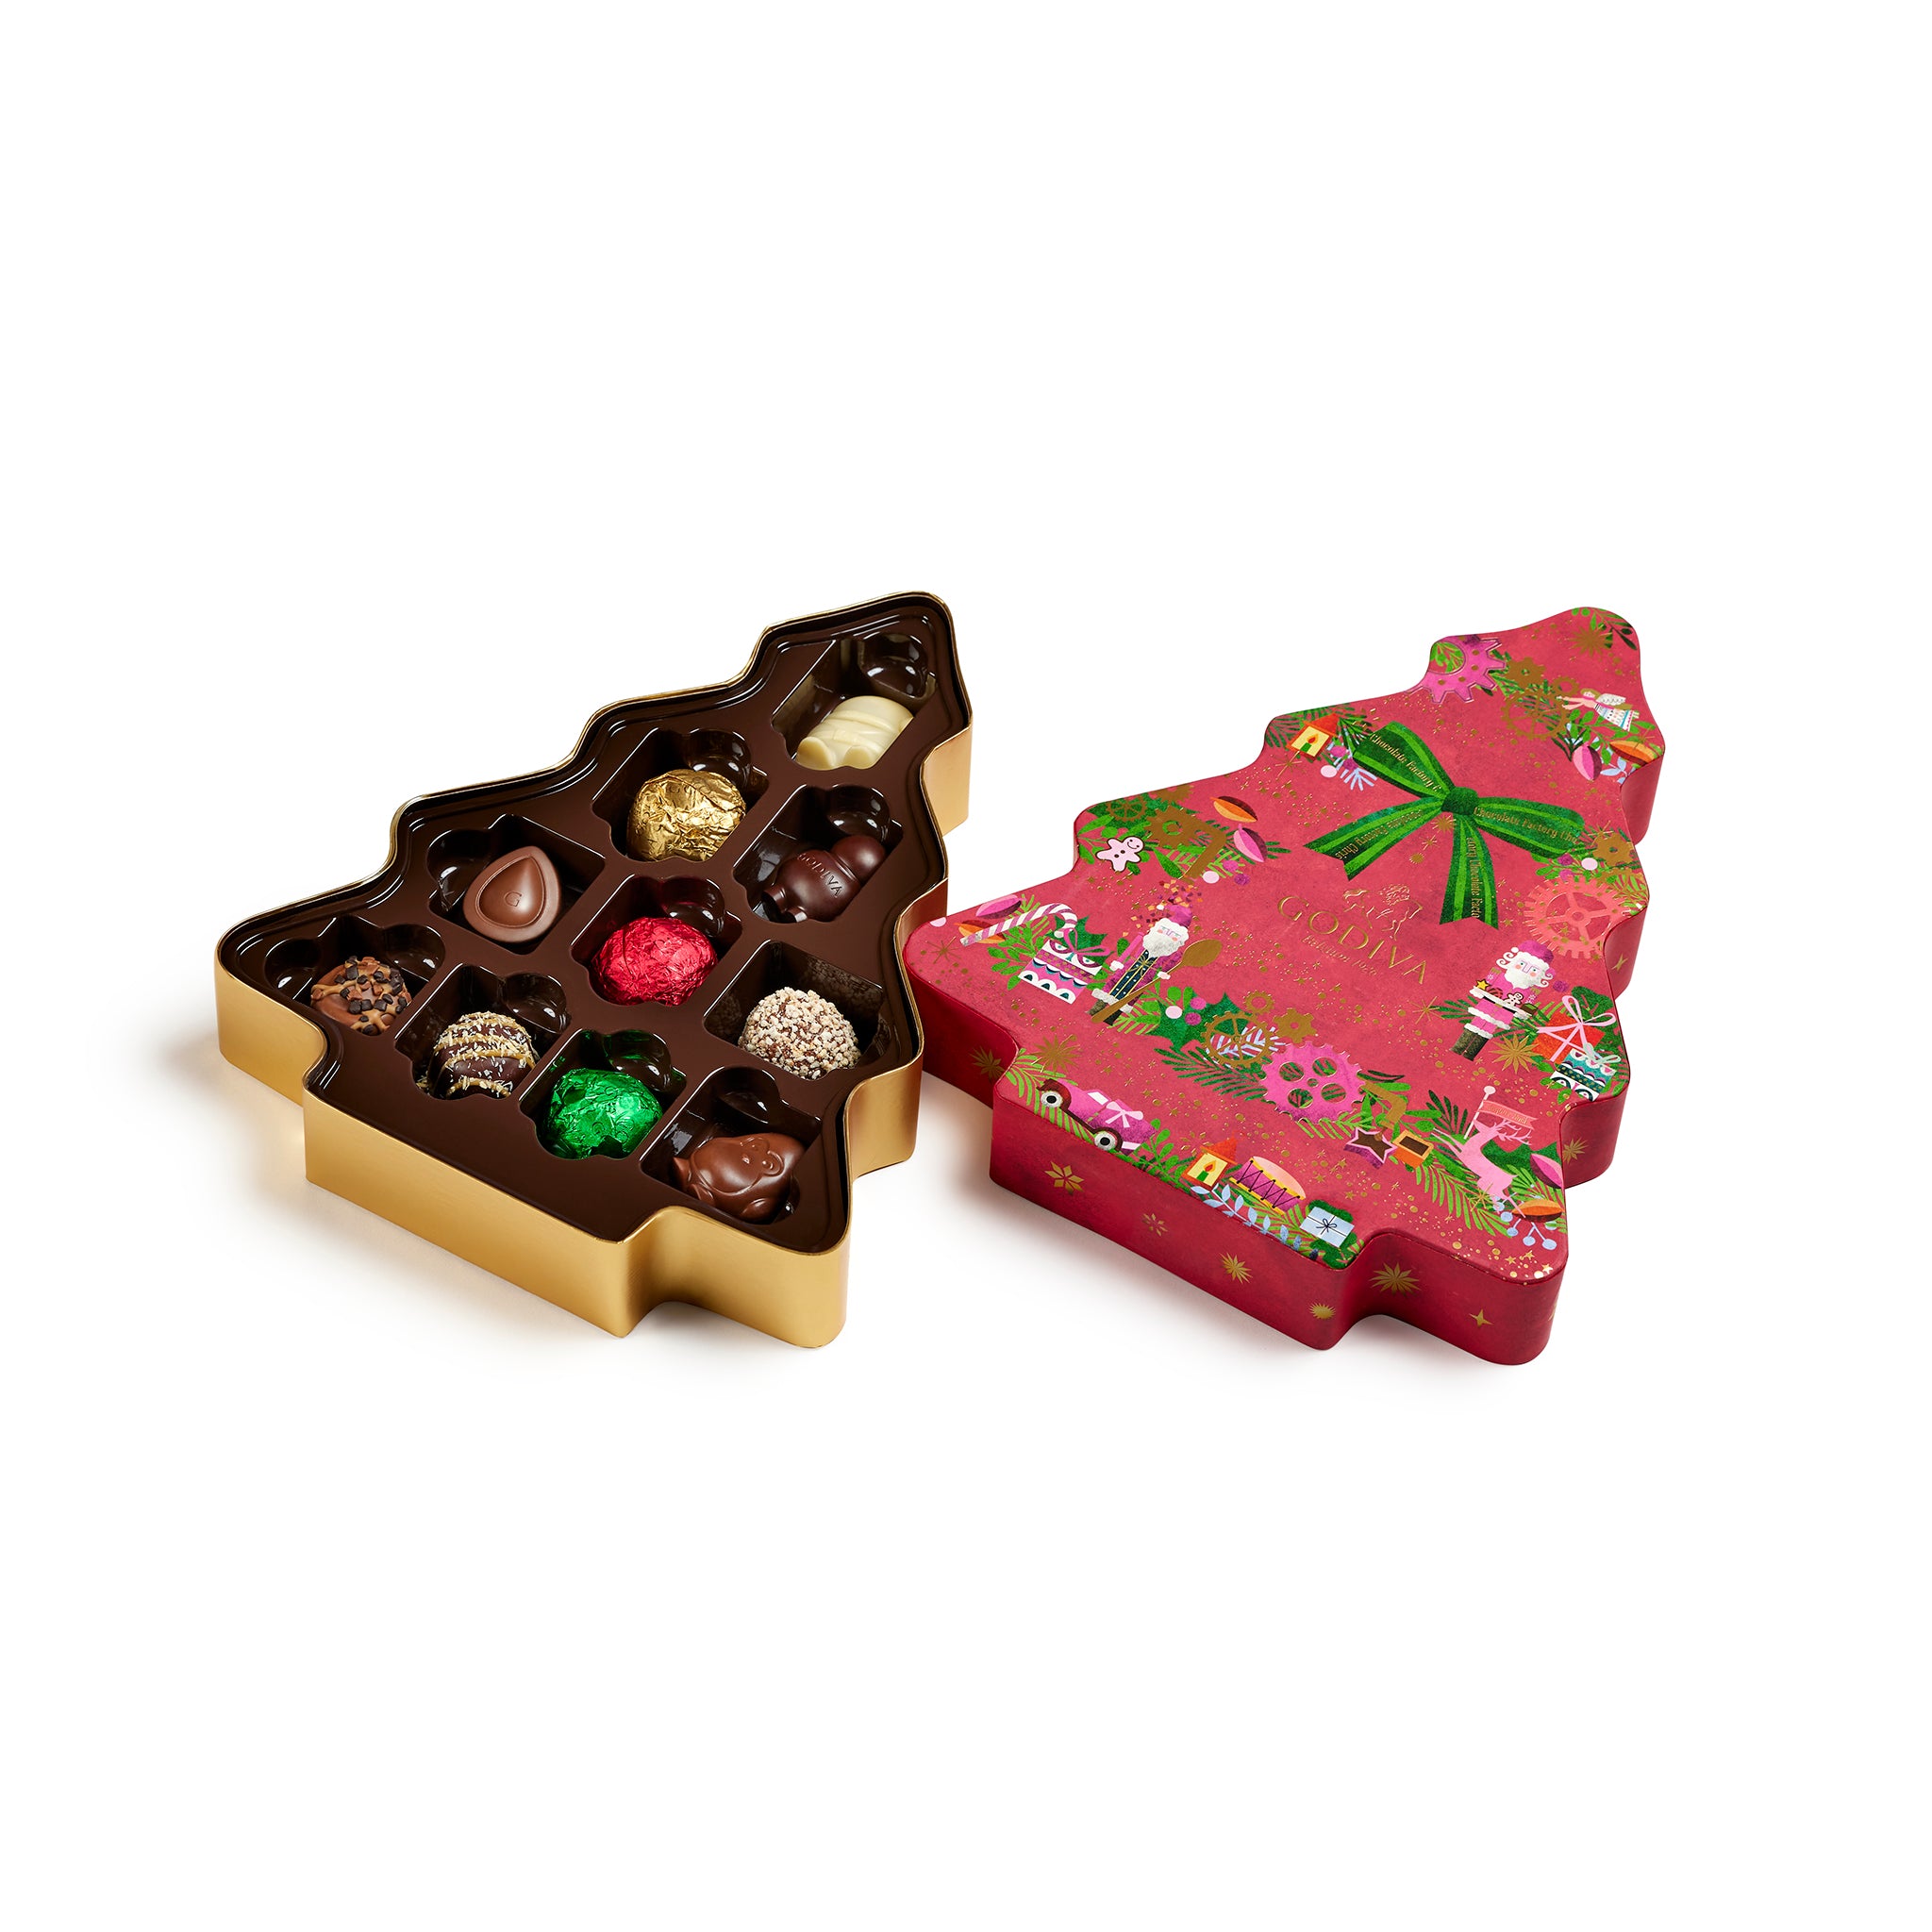 chocolate-christmas-tree-gift-box-10pc-1.jpg